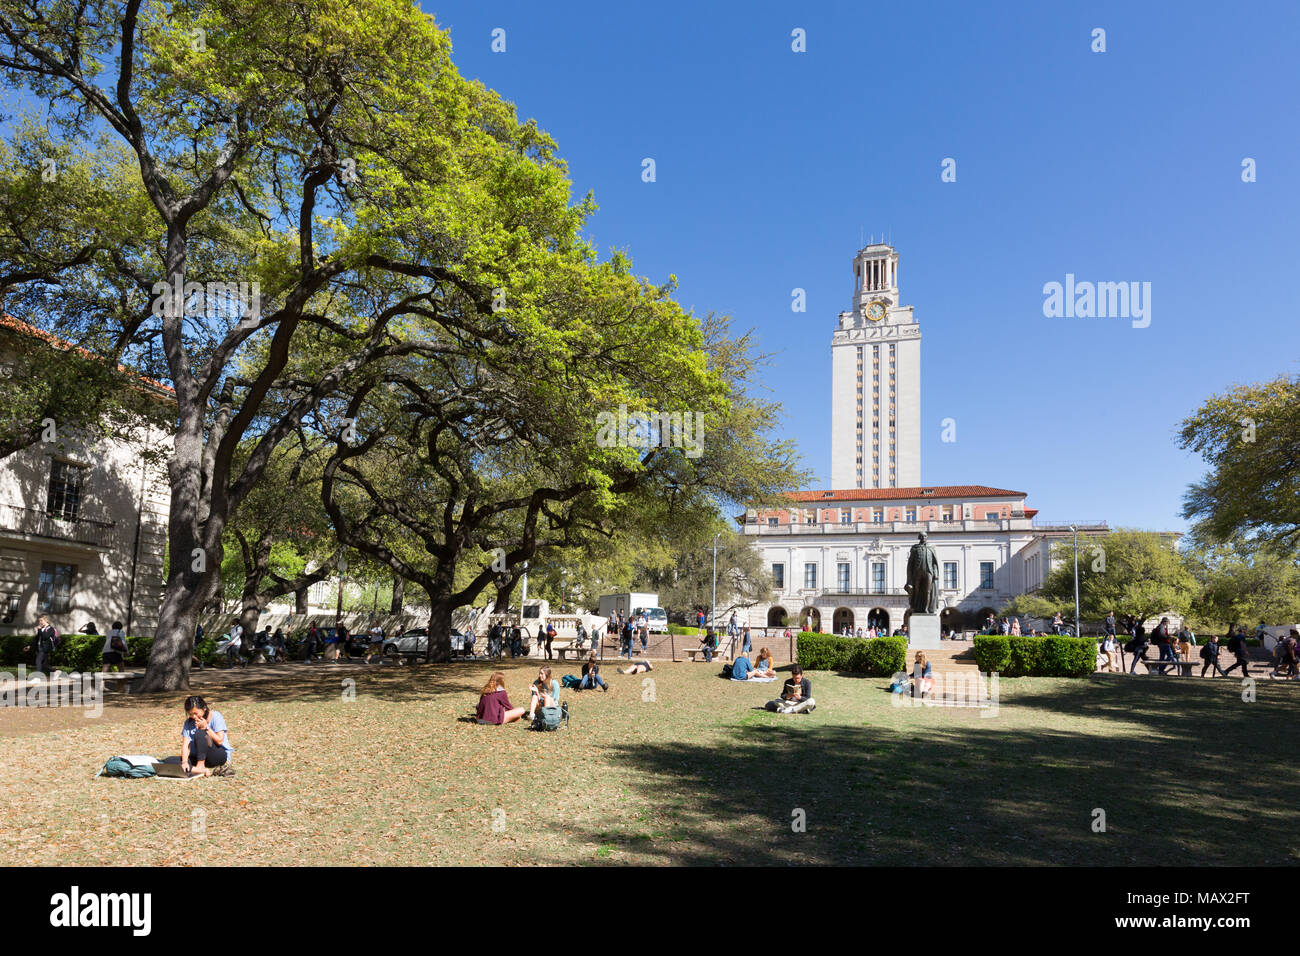 US University; Students reading on the grass in spring sunshine, The university of Texas Austin, Texas USA Stock Photo